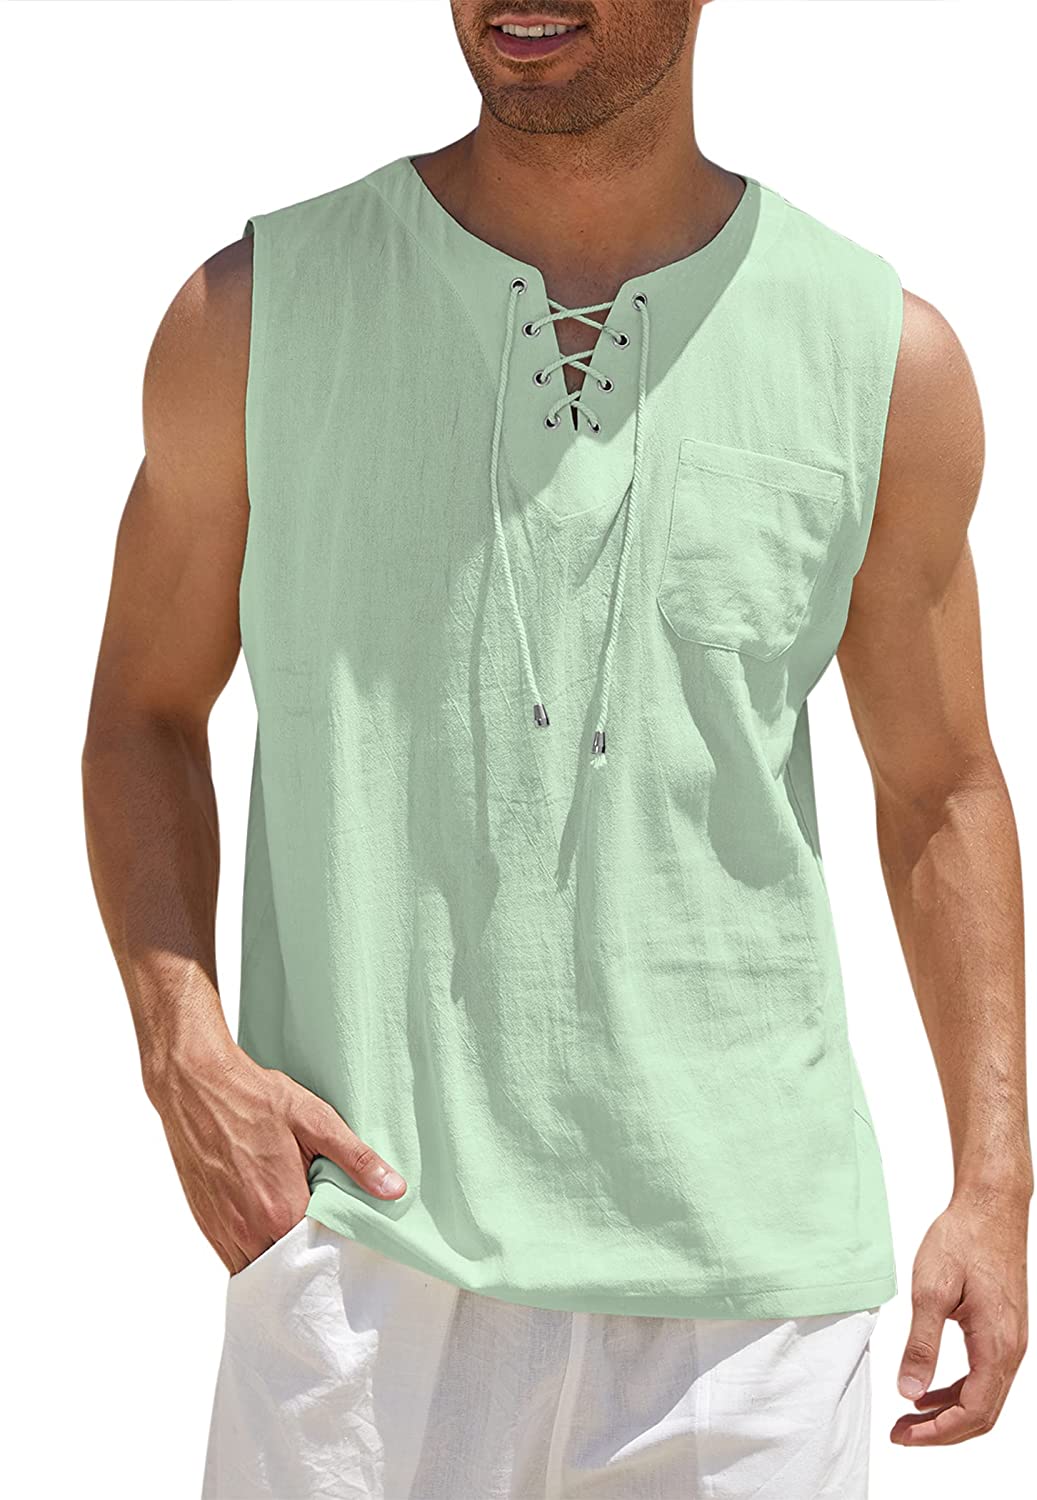 COOFANDY Men's Cotton Linen Tank Top Shirts Casual Sleeveless Lace Up Beach Hippie Tops Bohemian Renaissance Pirate Tunic 